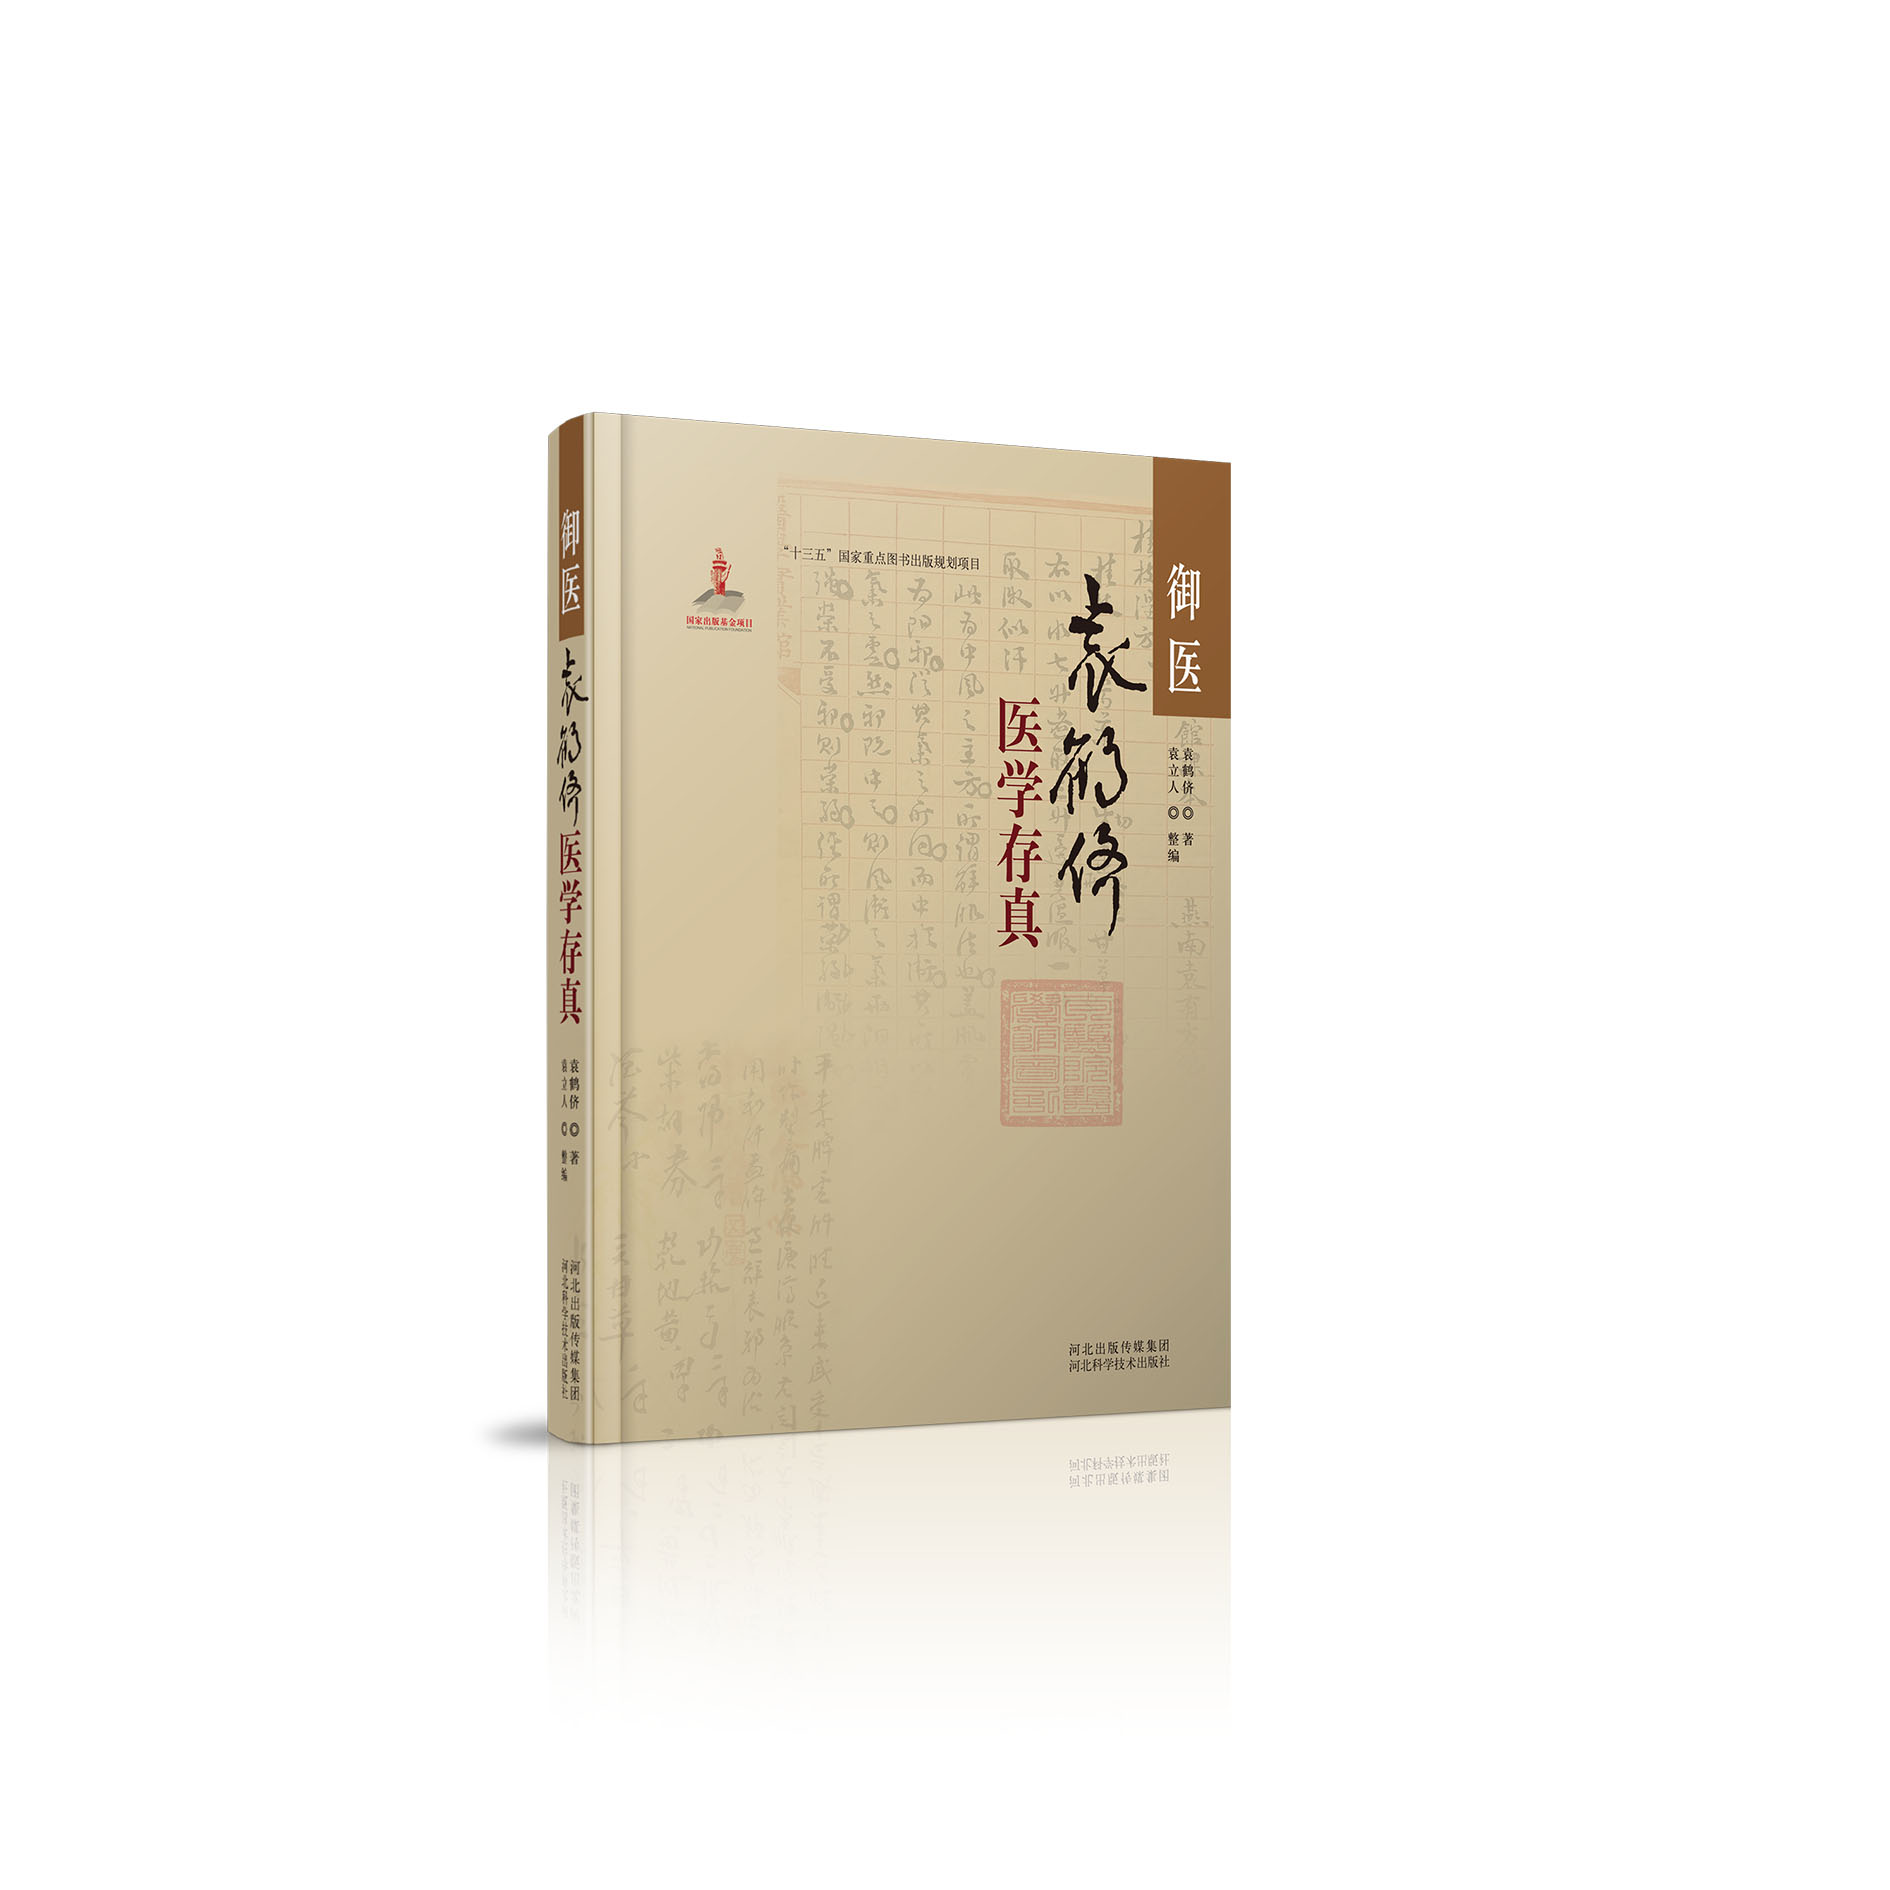 Yuan Hechai Manuscripts